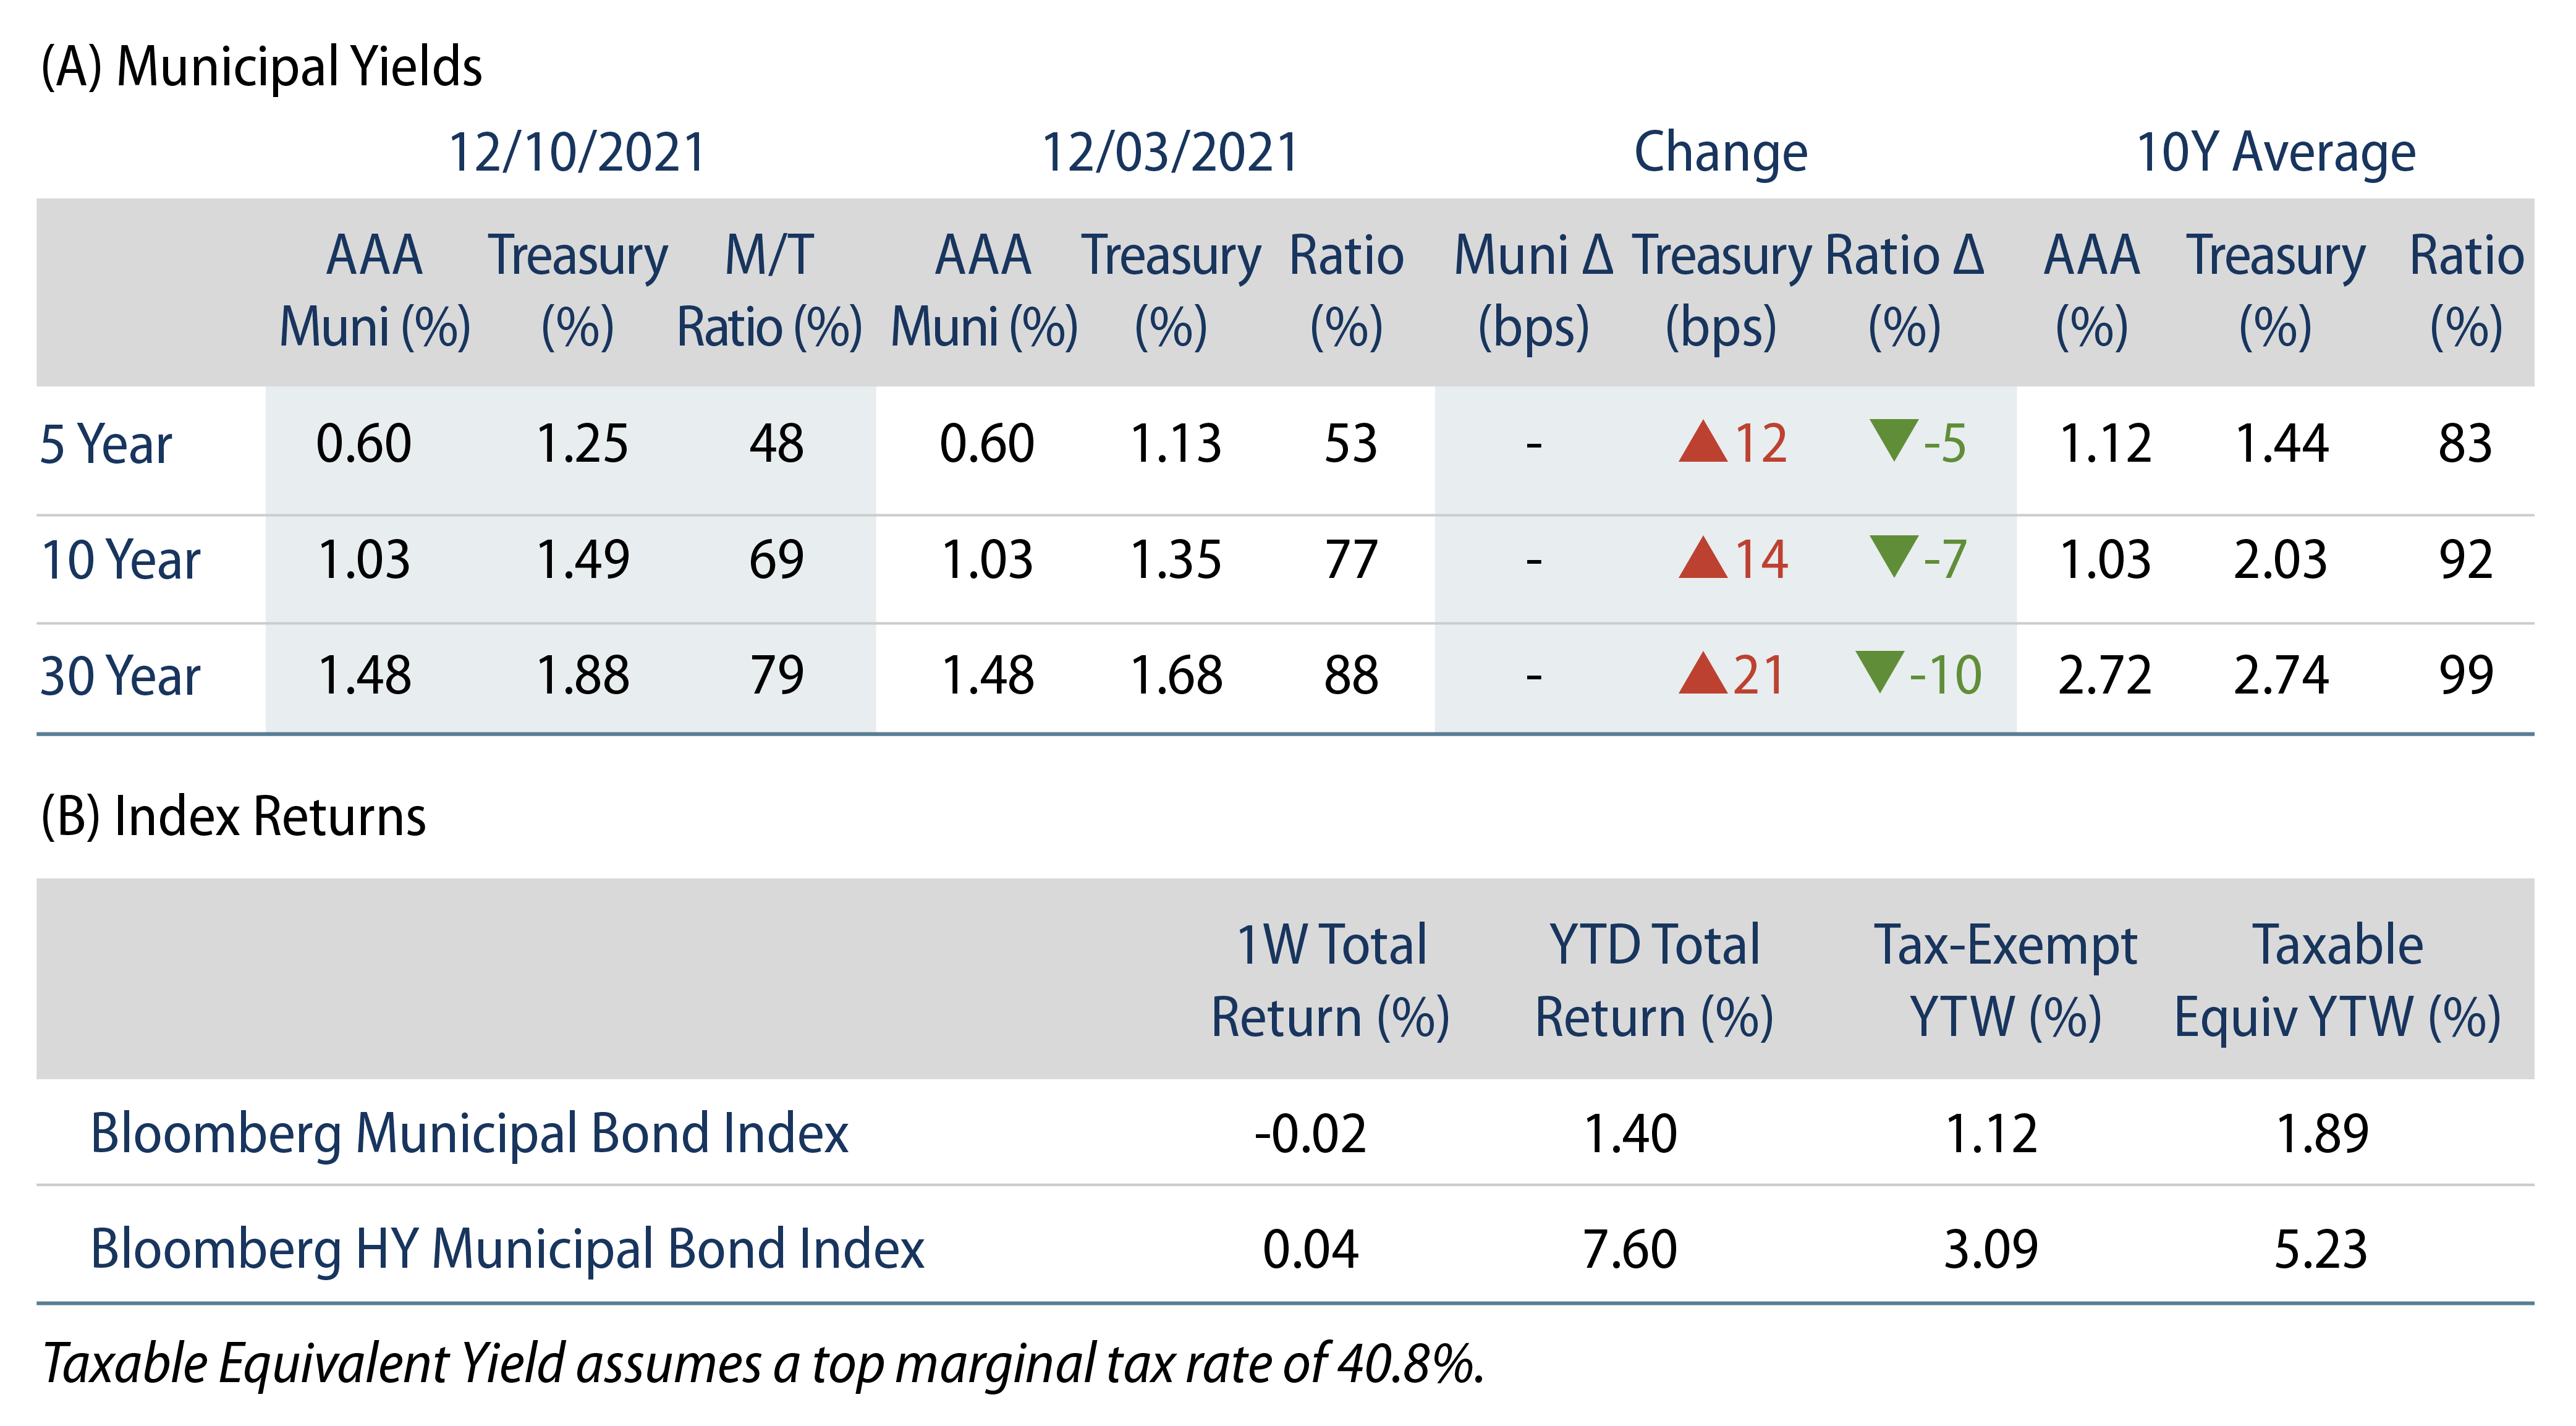 Municipal Bond Yields and Index Return